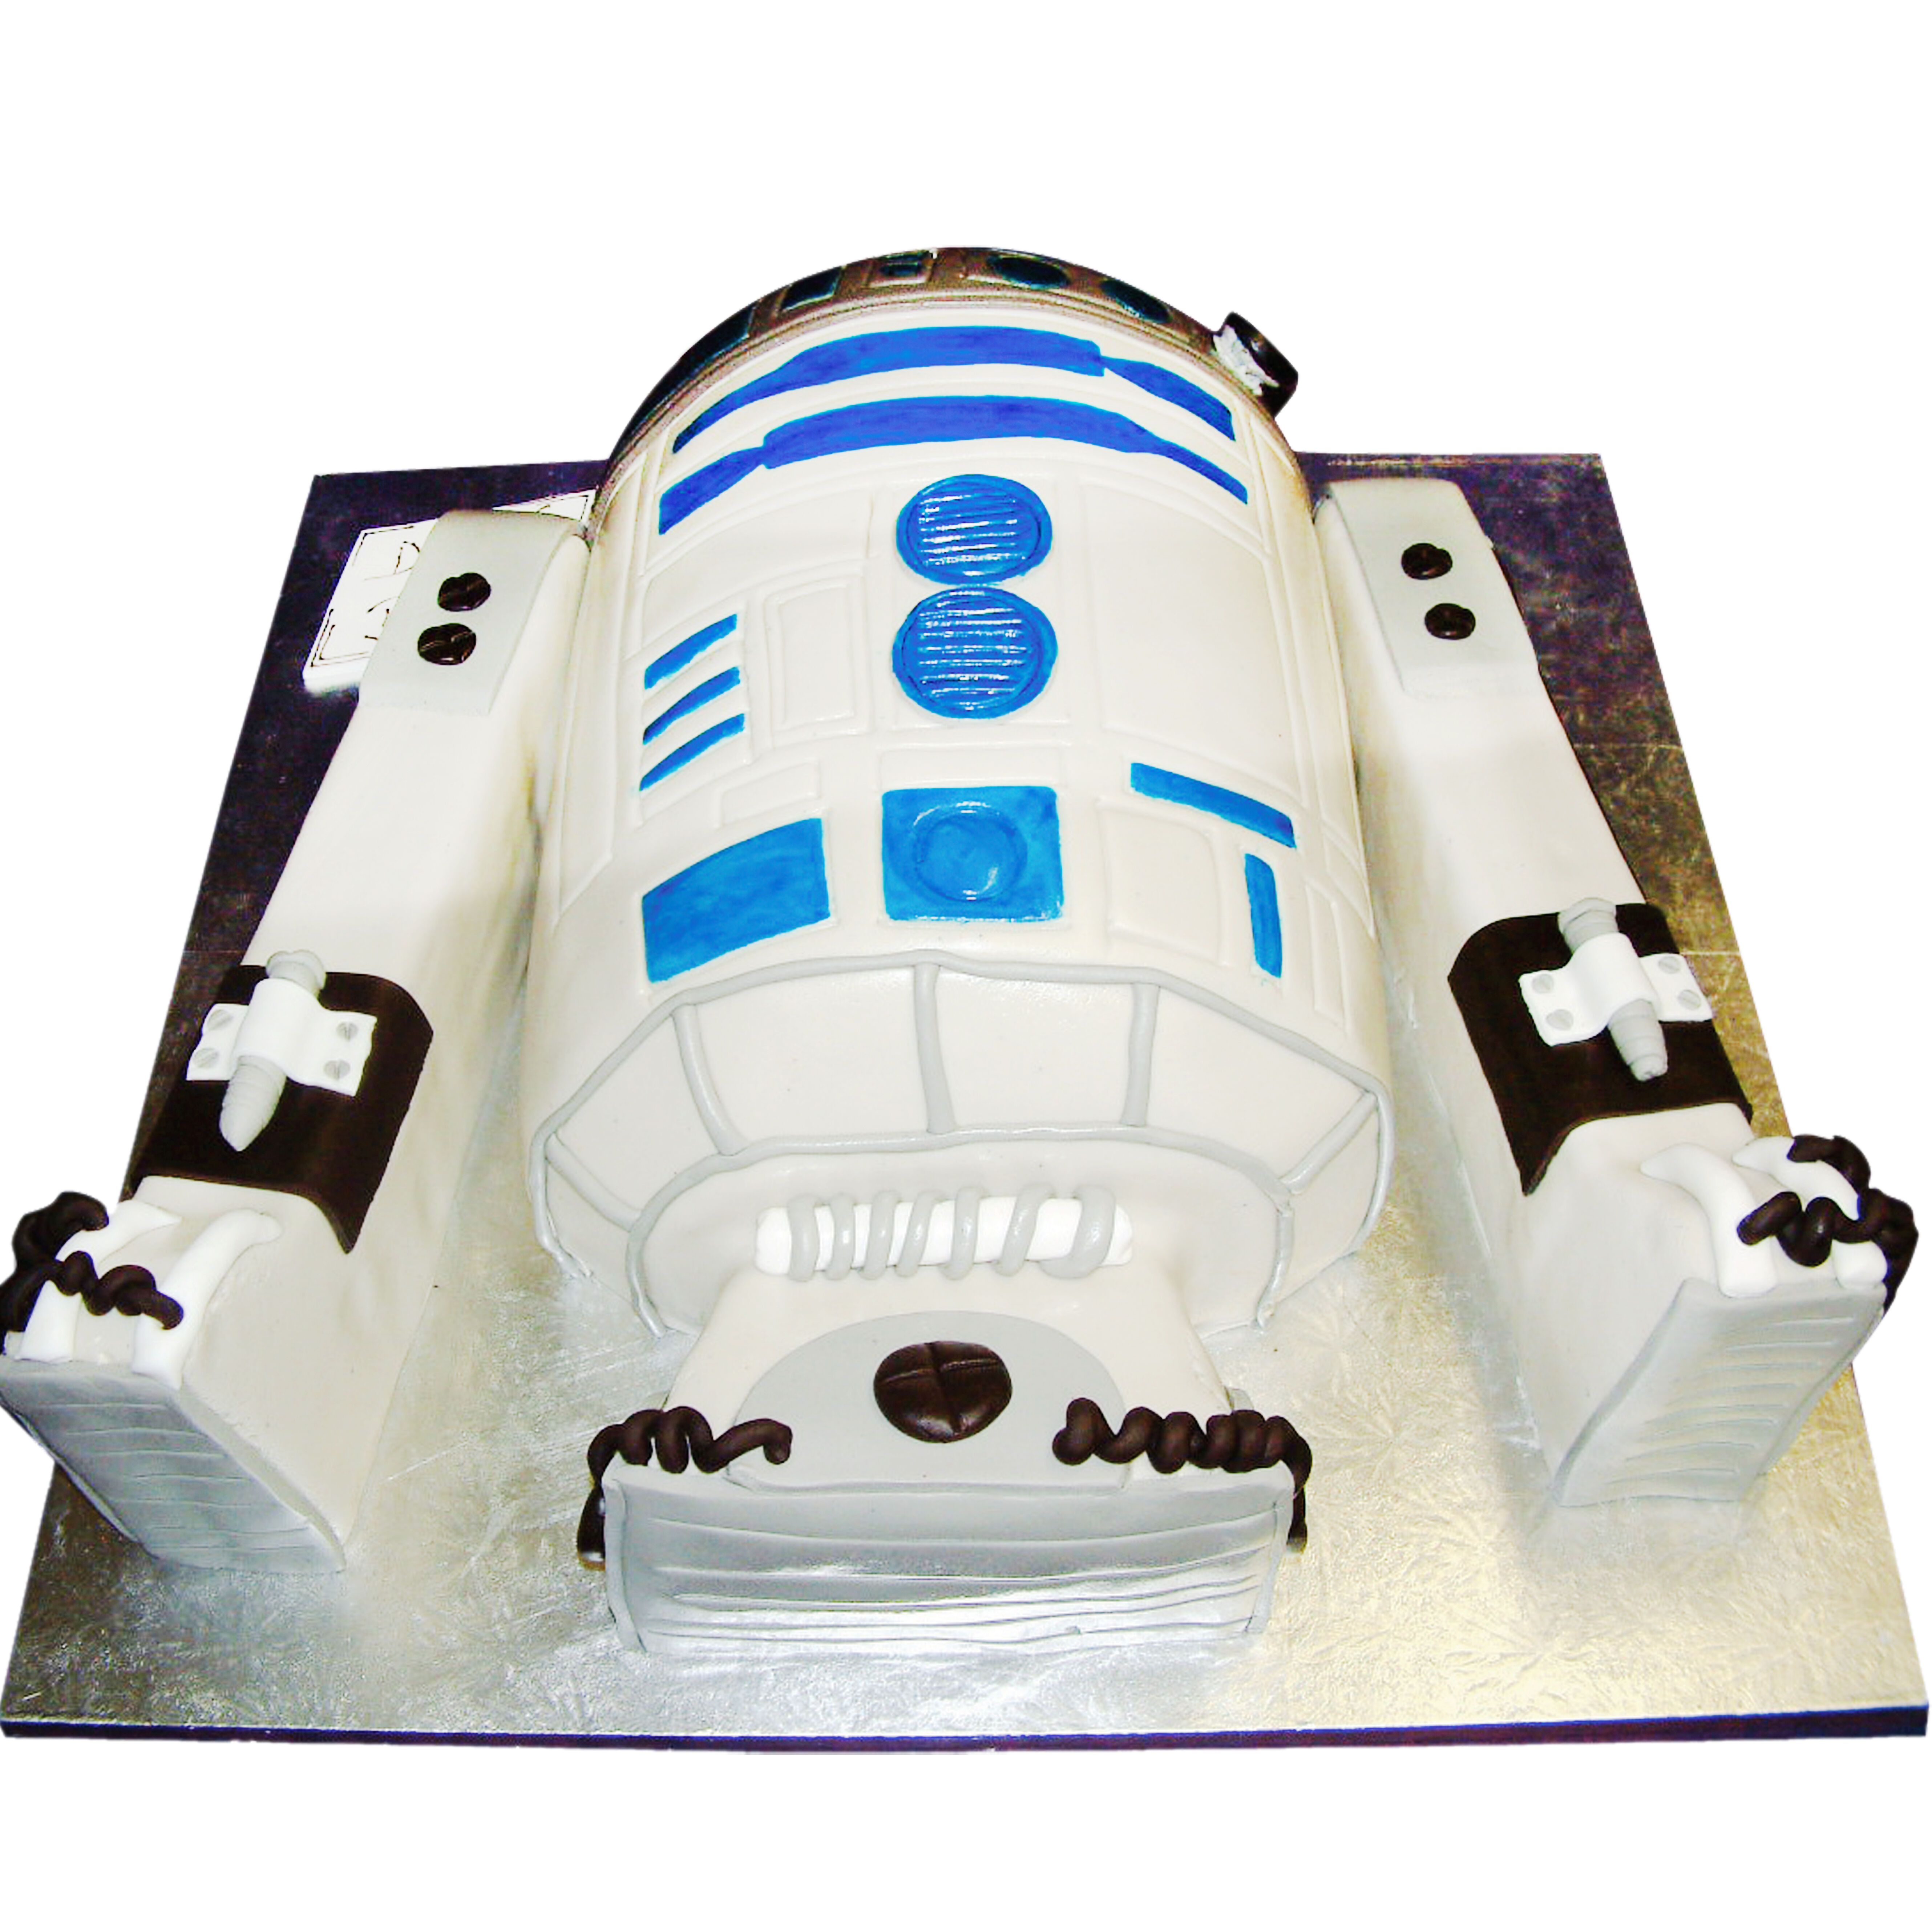 R2-D2 robot star wars cake